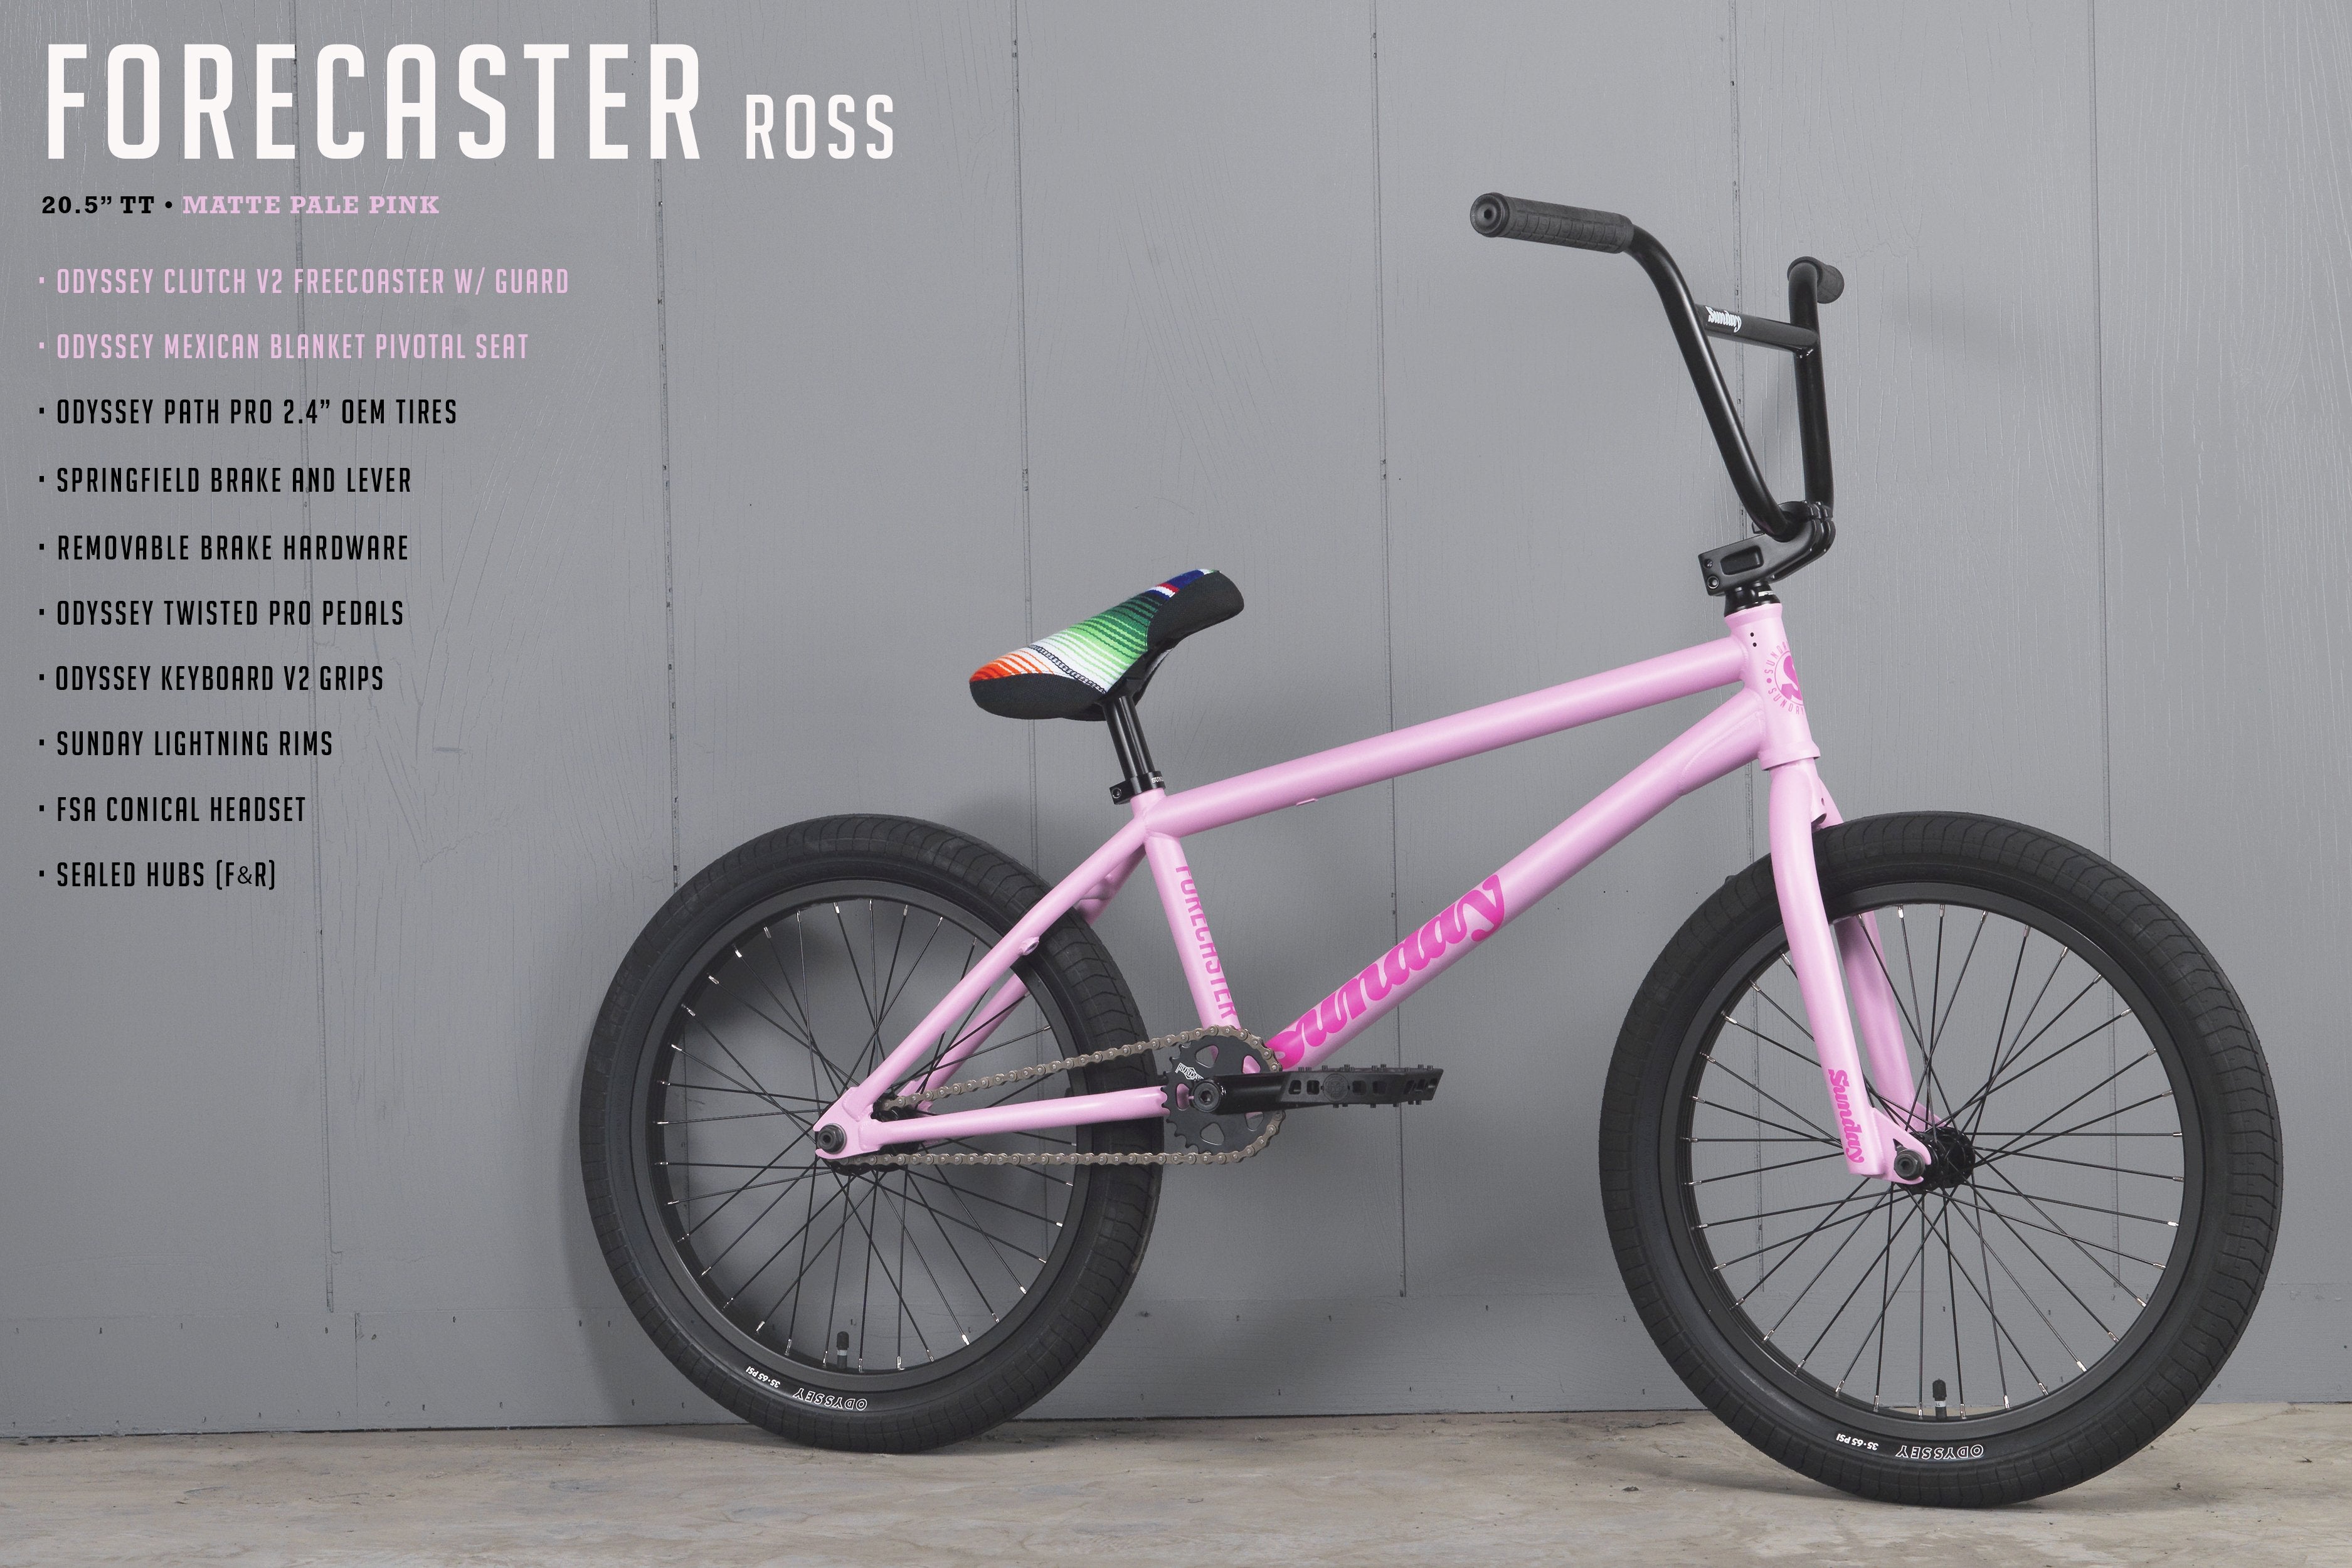 pink bike with training wheels